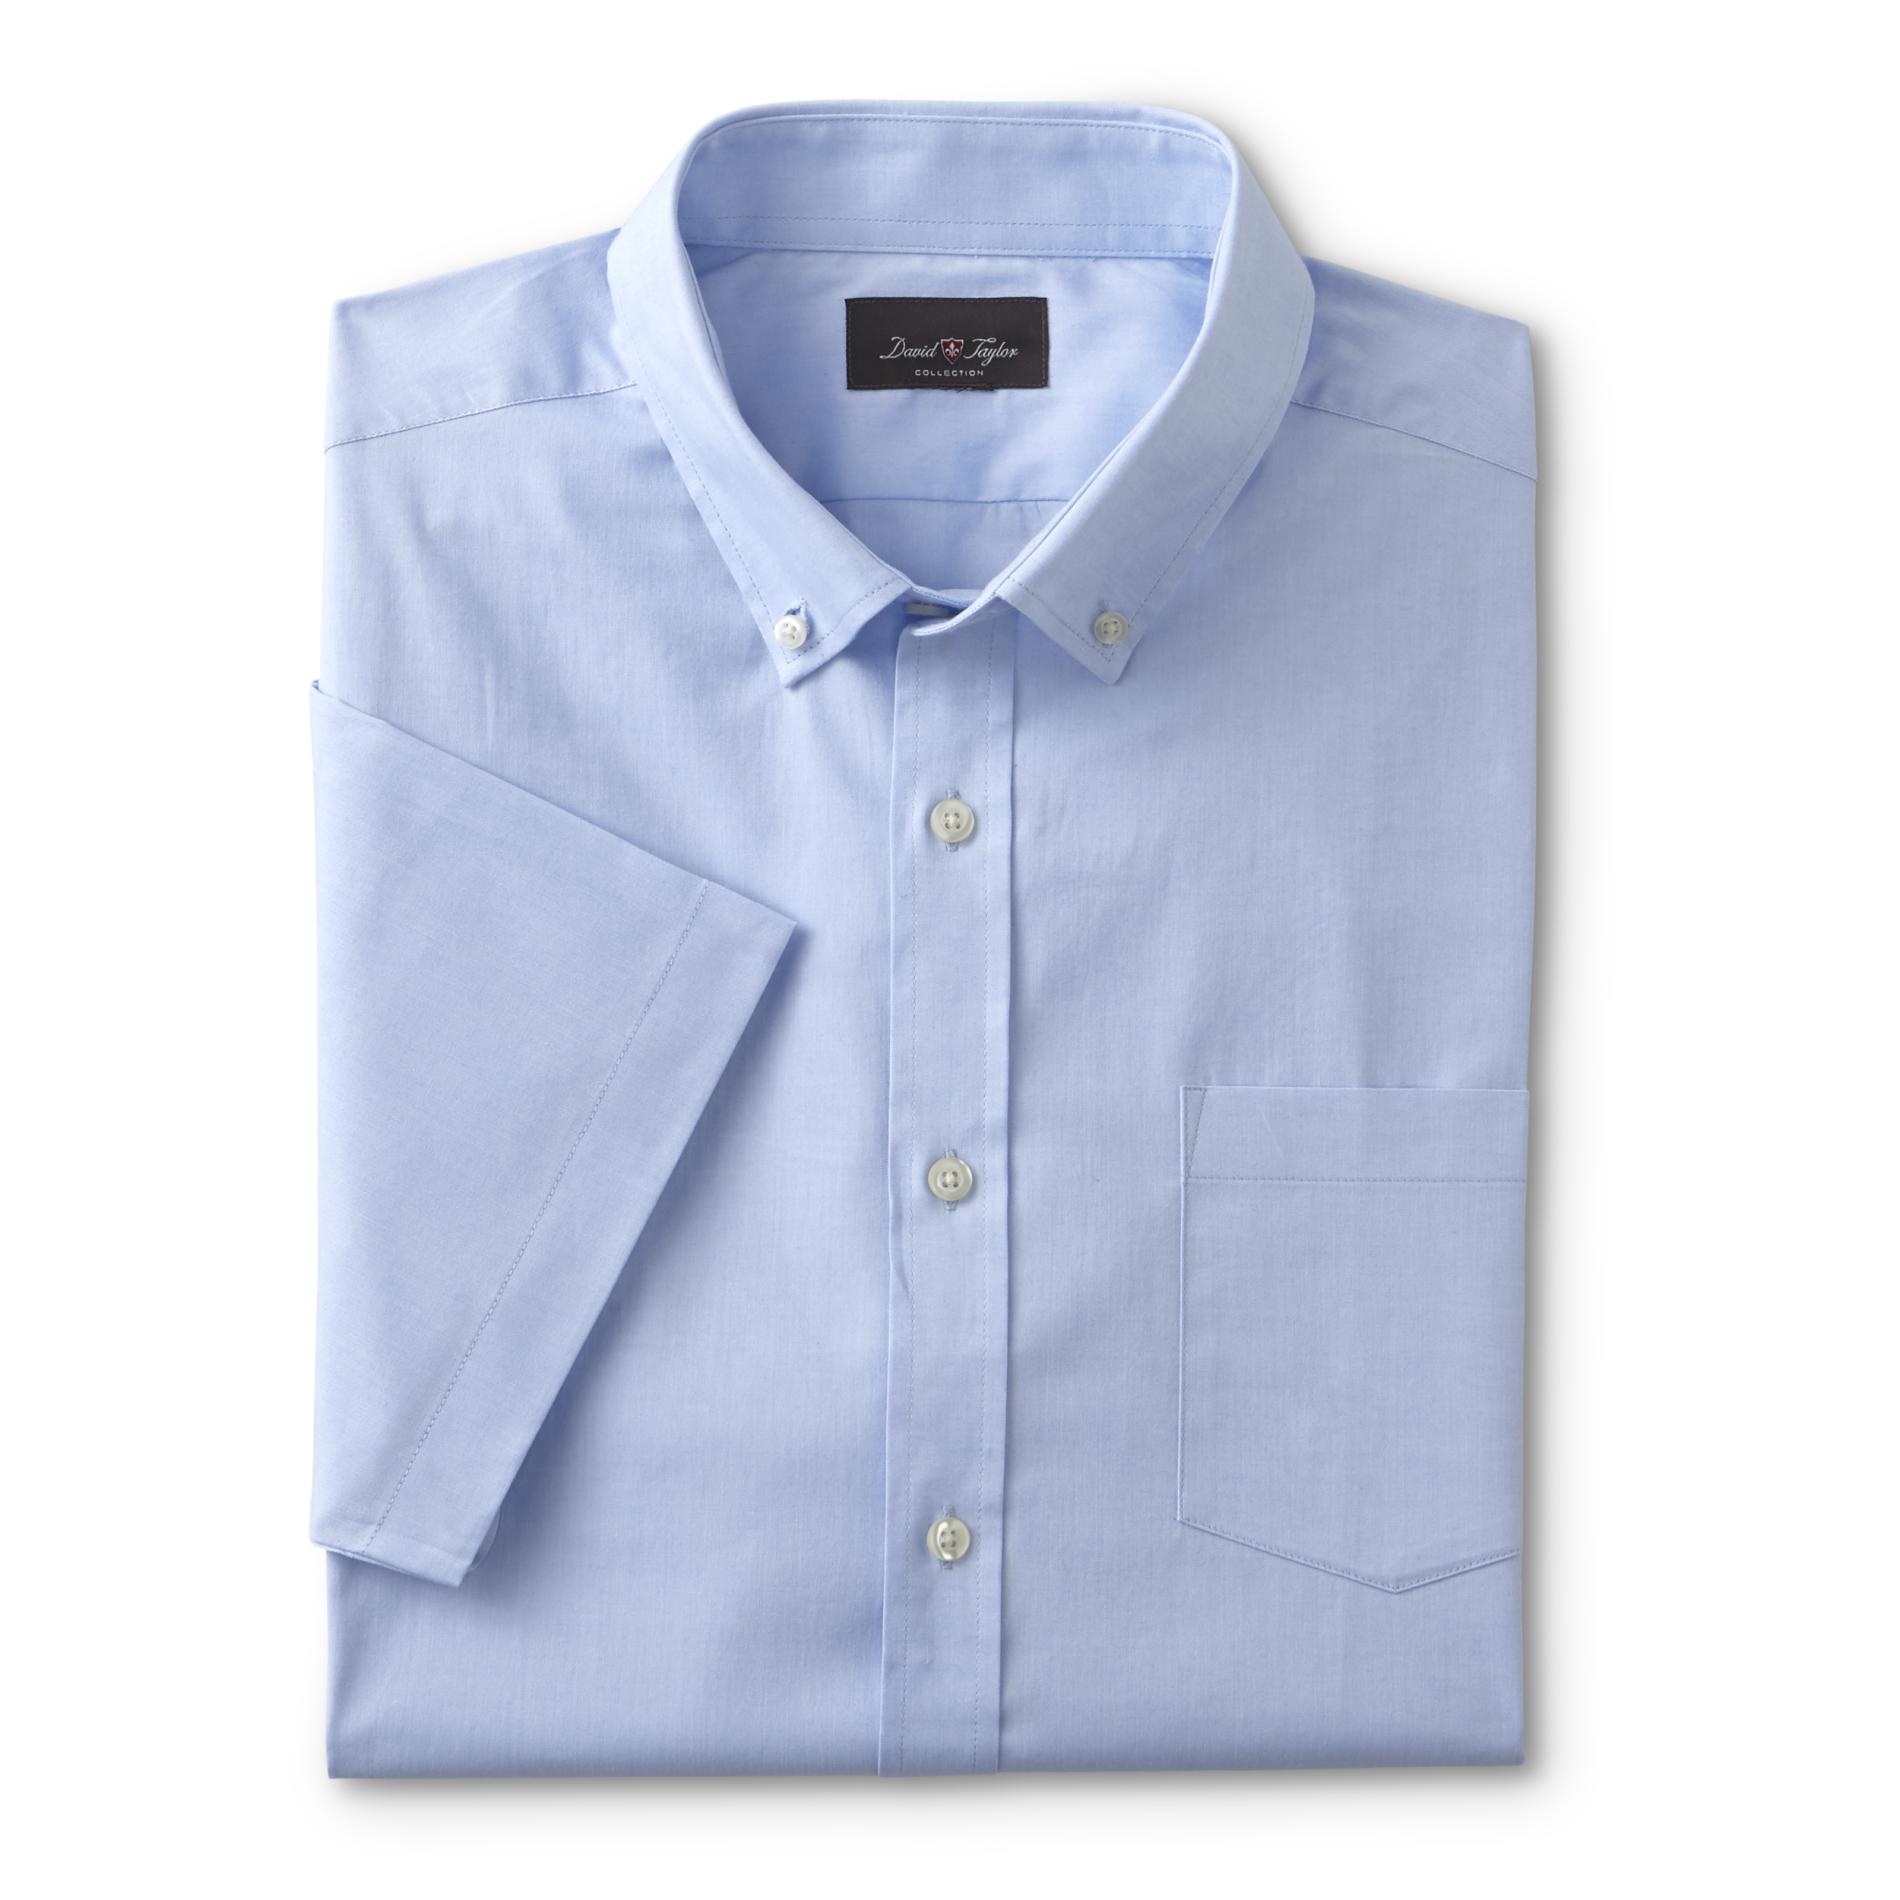 David Taylor Collection Men's Short-Sleeve Oxford Shirt